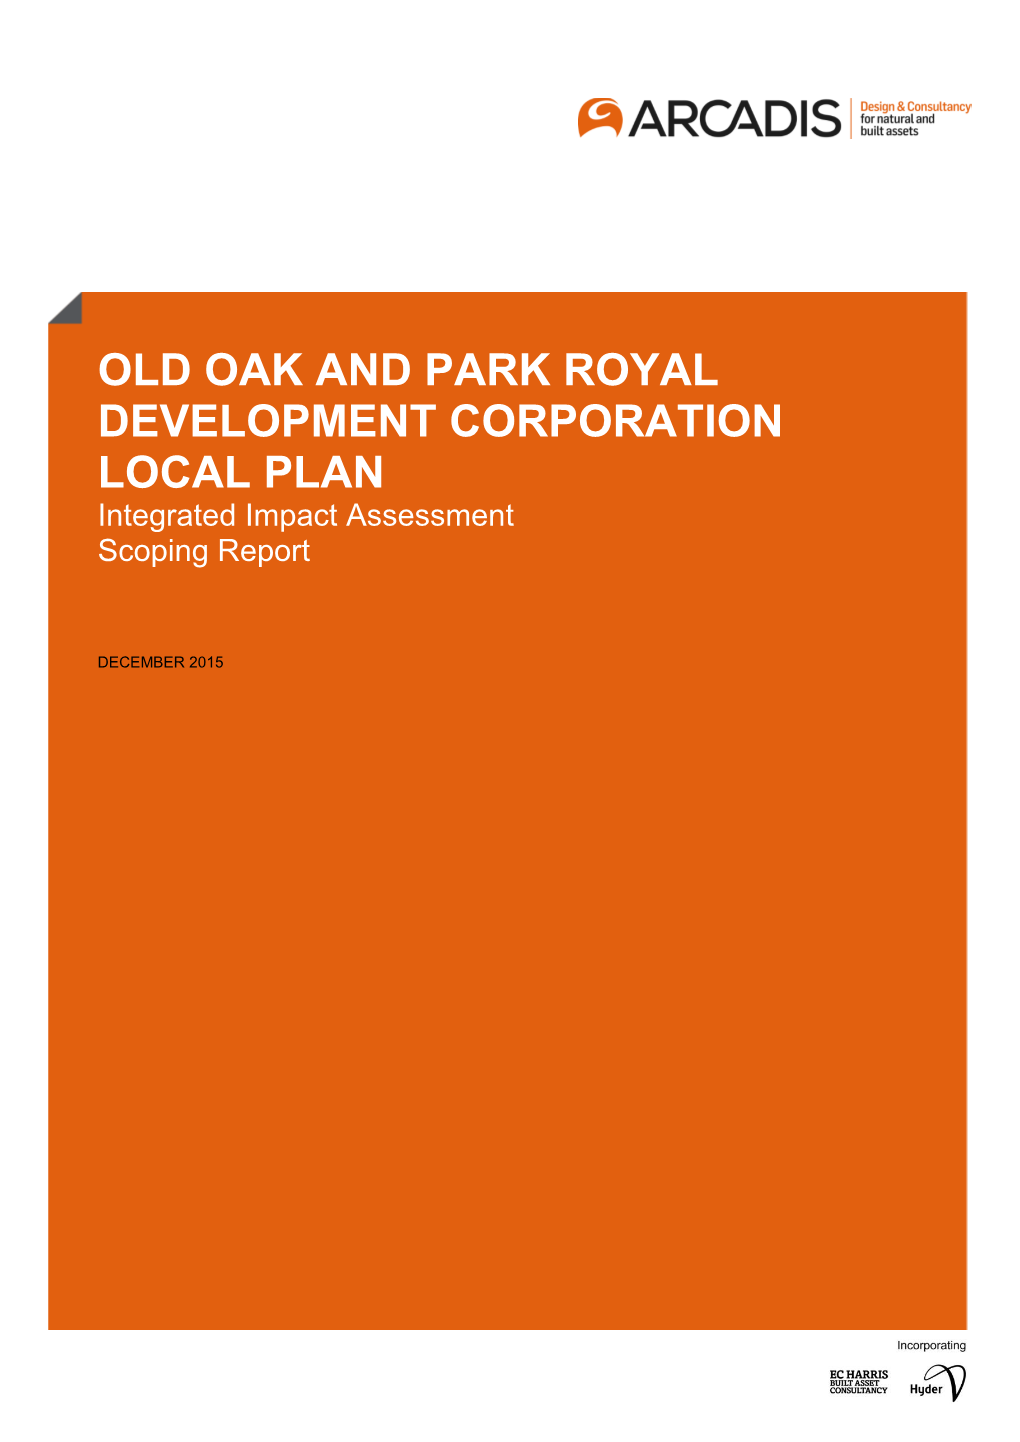 Old Oak and Park Royal Development Corporation